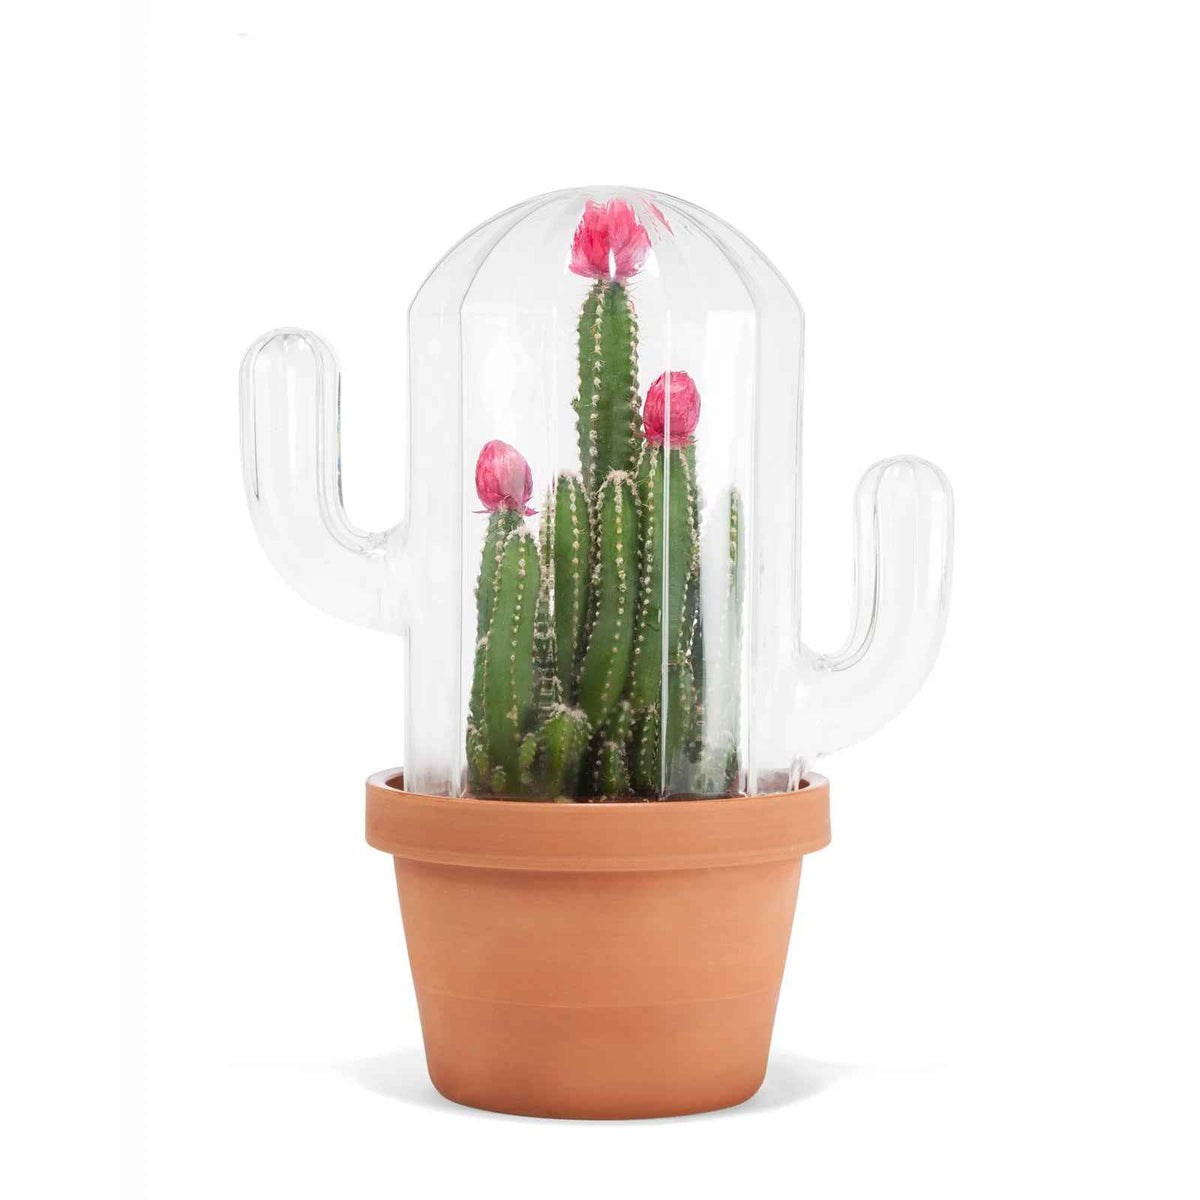 Cactus Terrarium Planter w/ Glass Dome